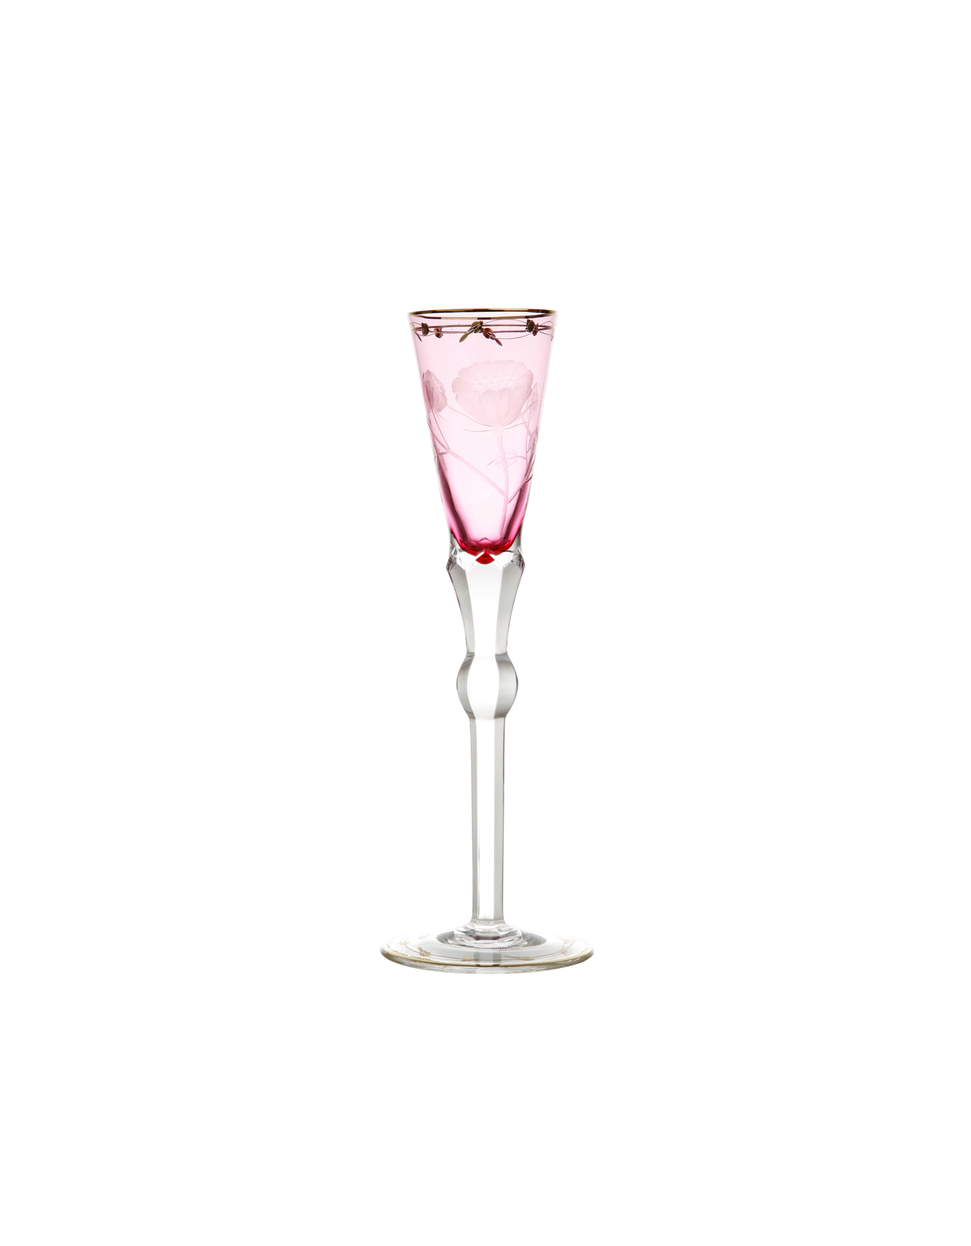 Paula champagne glass, 140 ml